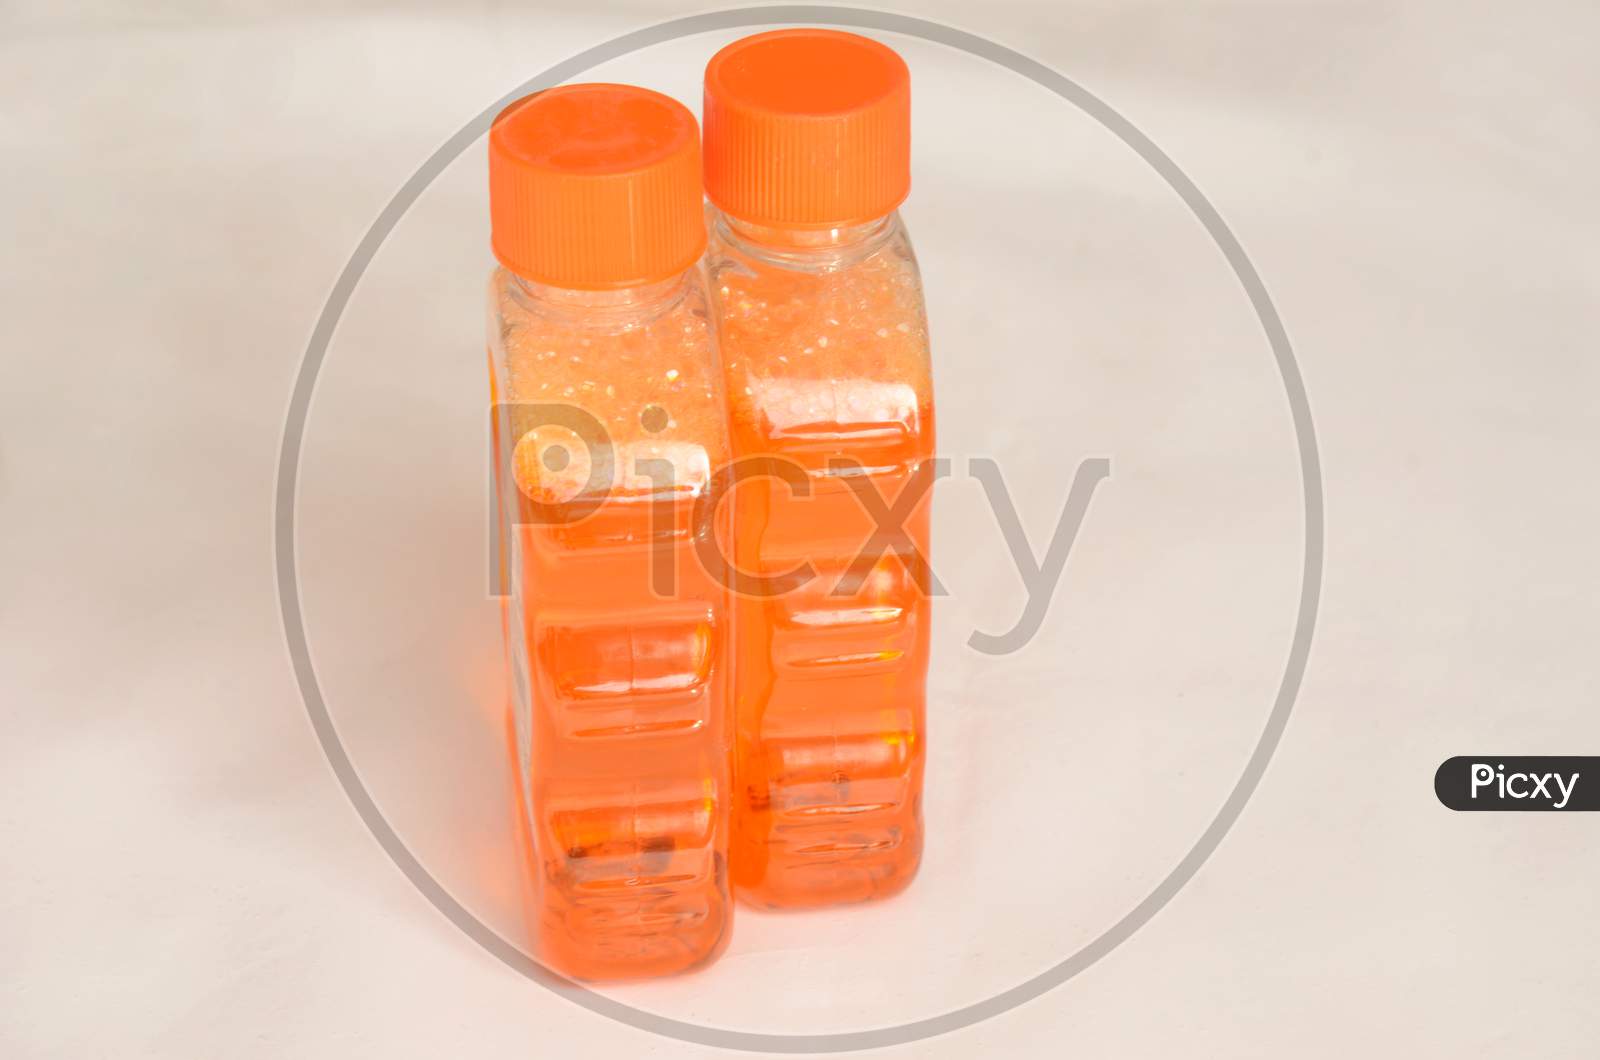 The Orange Color Sanitizer Plastic Bottle Isolated On White Background.